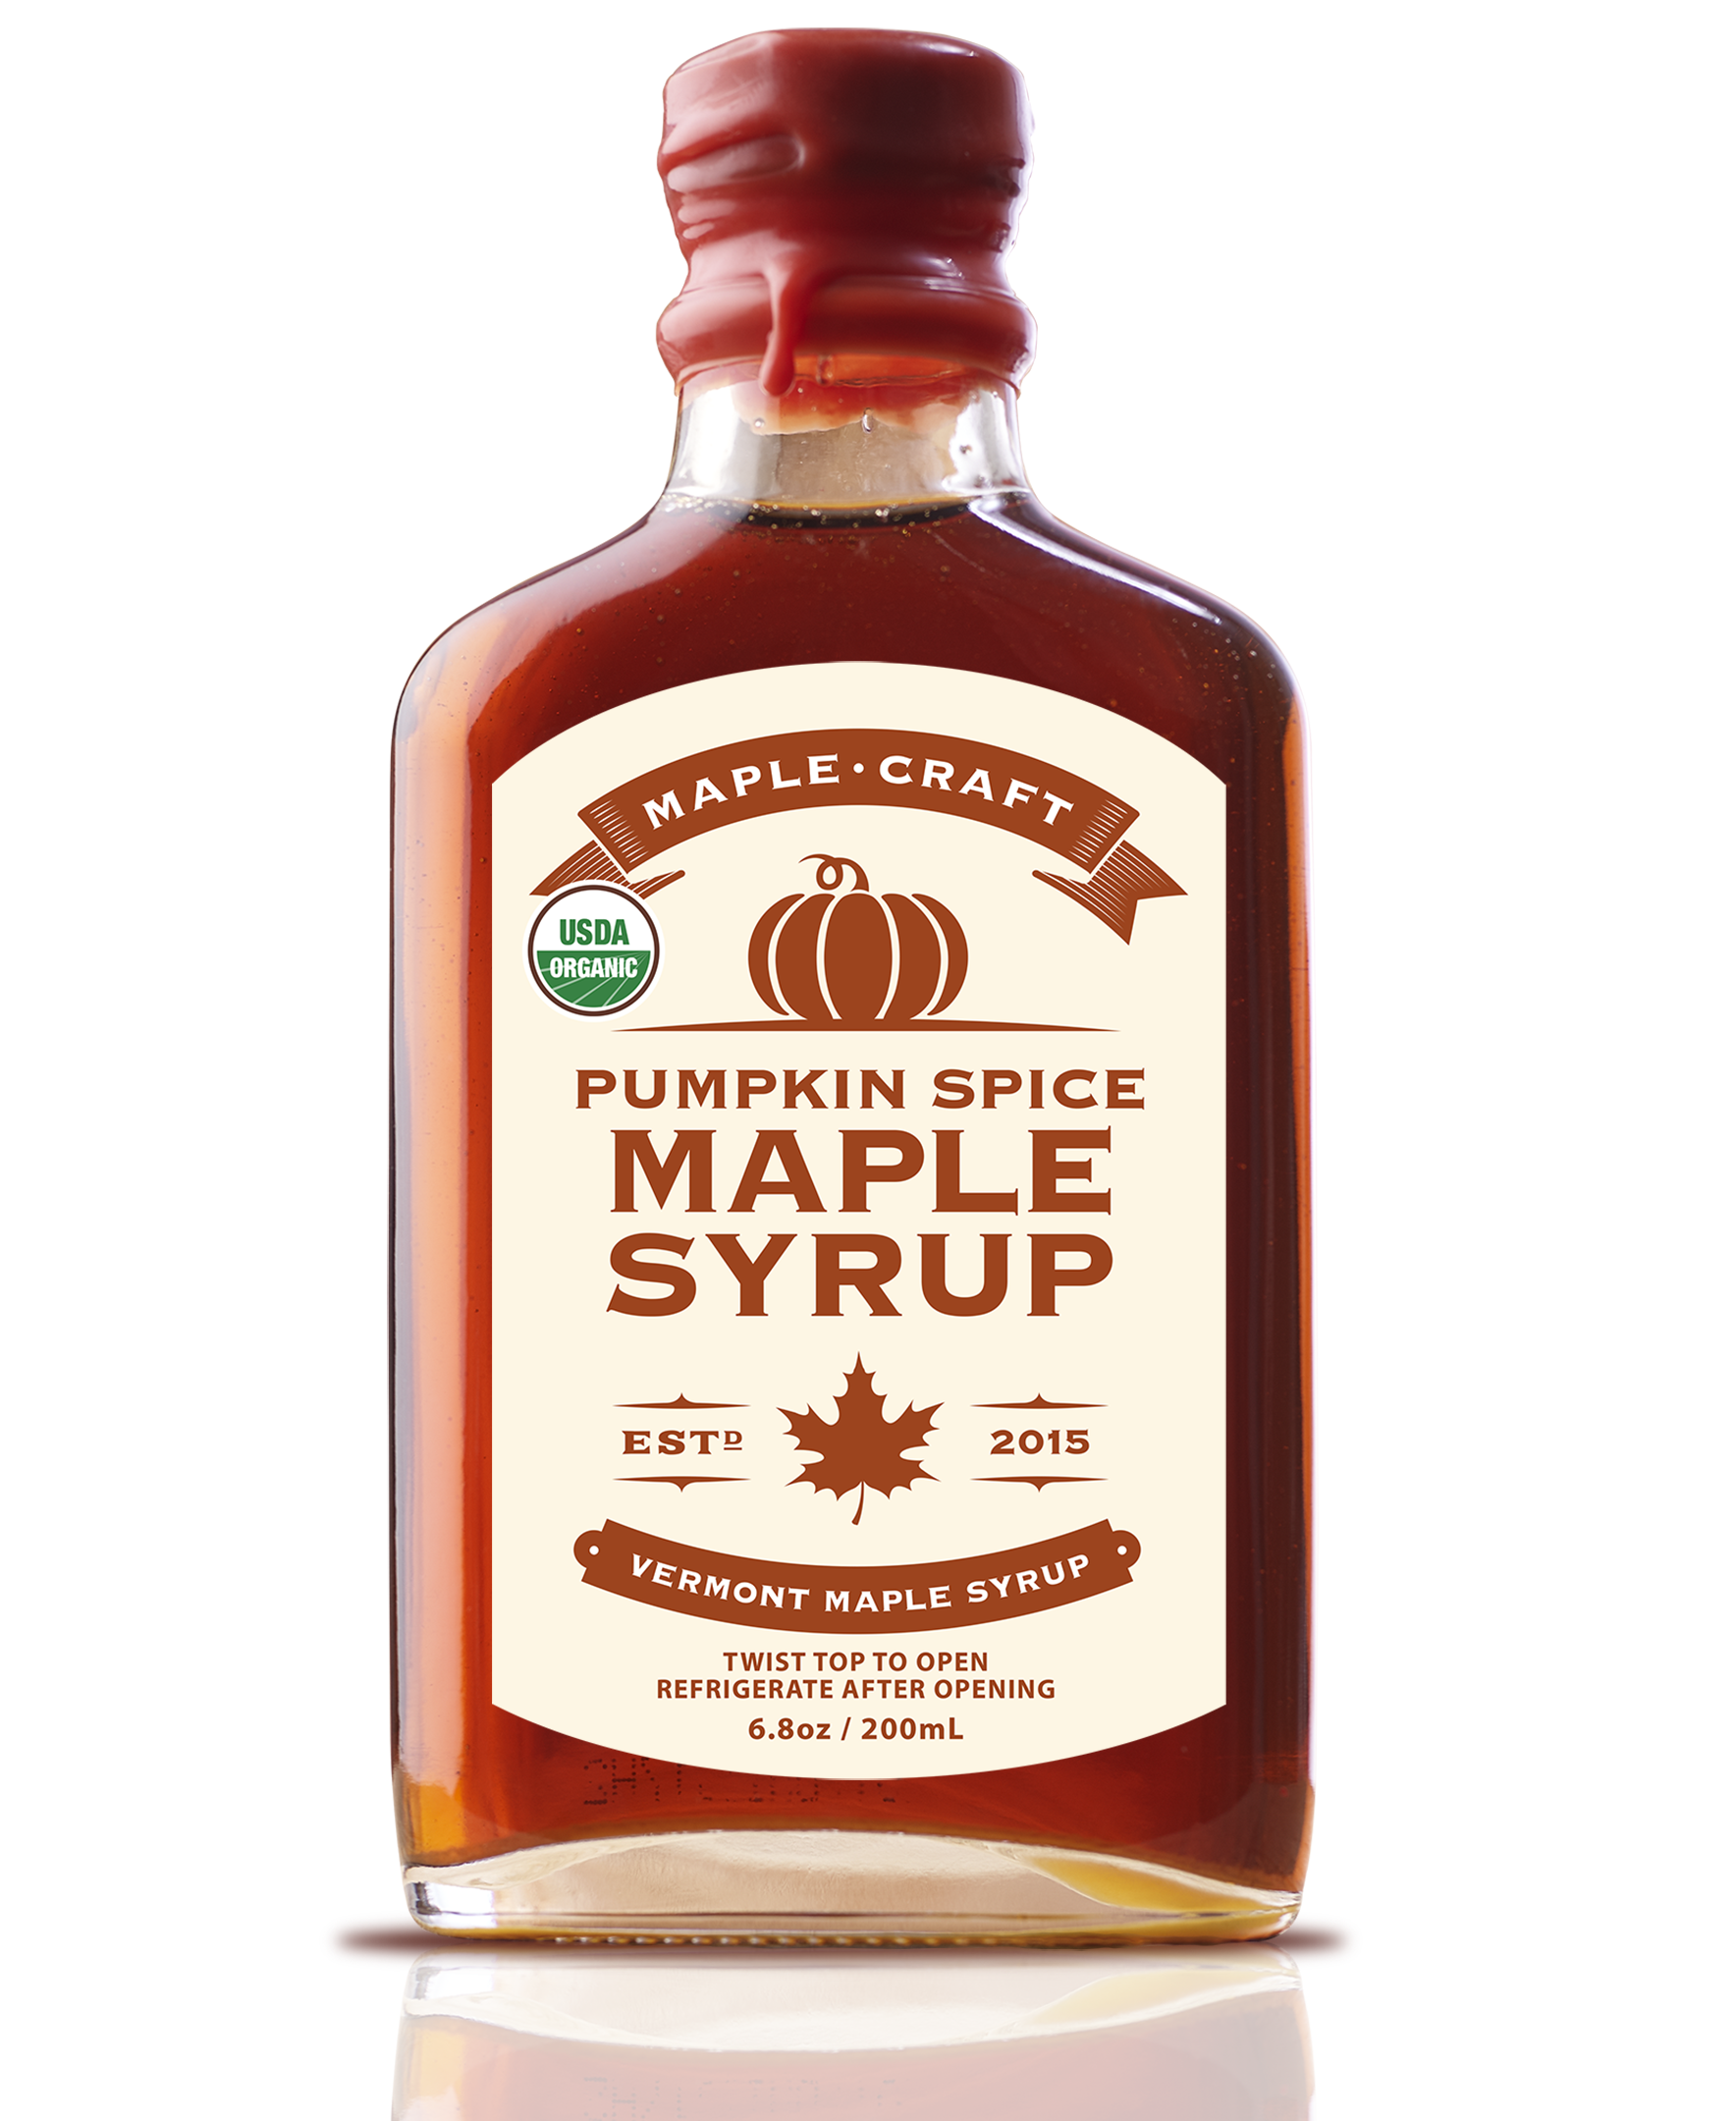 Pumpkin Spice Maple Craft Syrup (Organic)